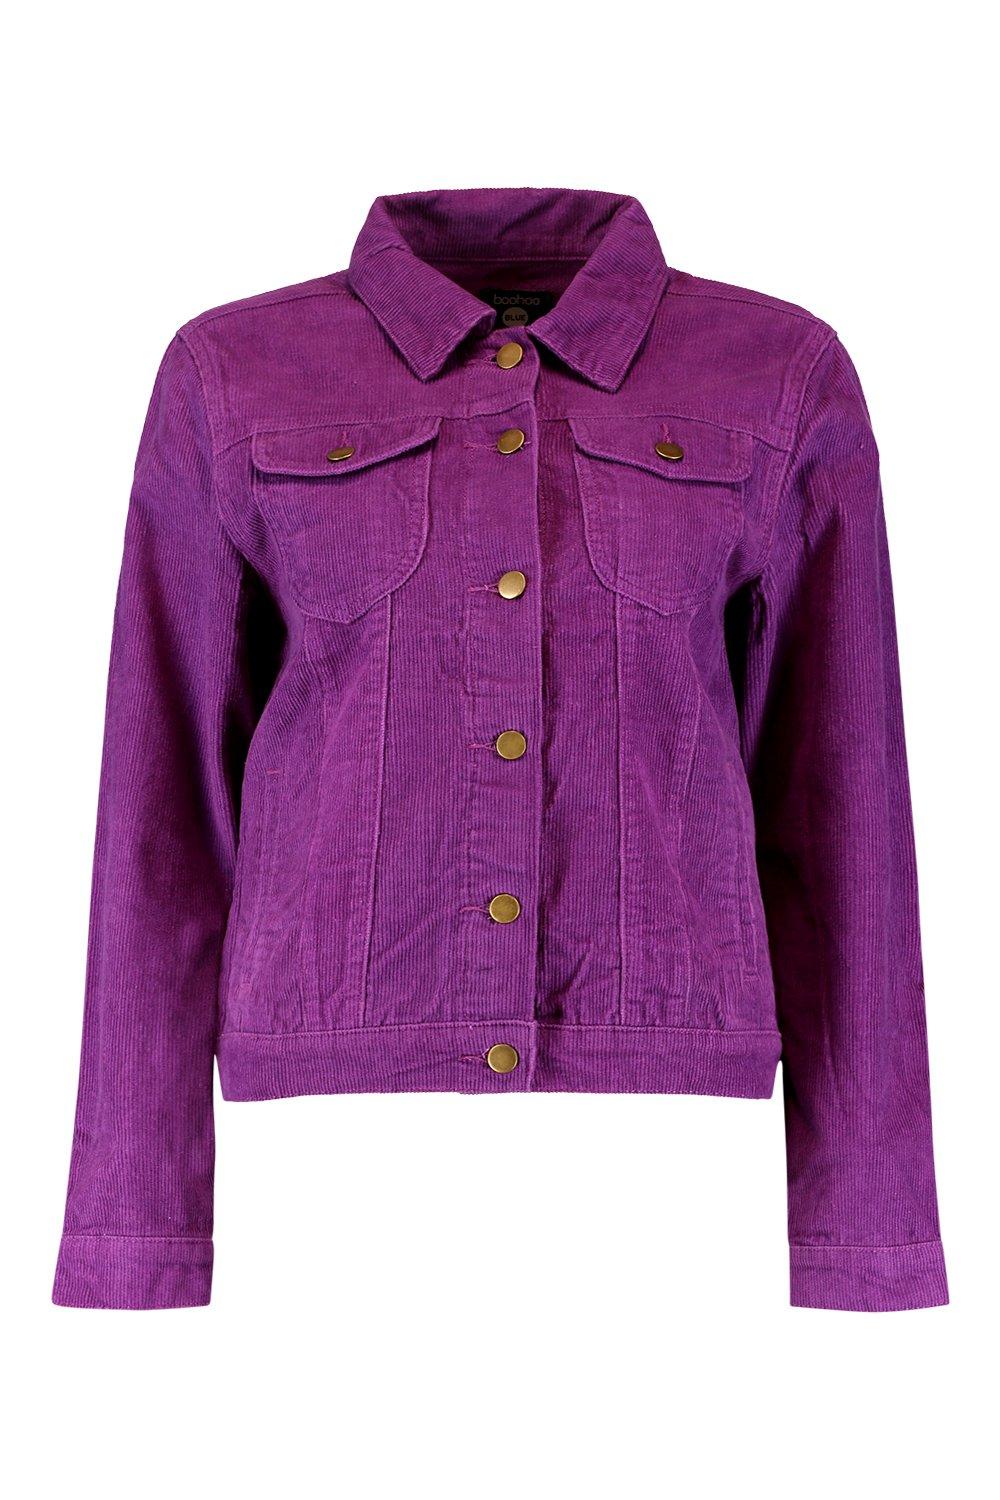 Cord Purple Denim Jacket